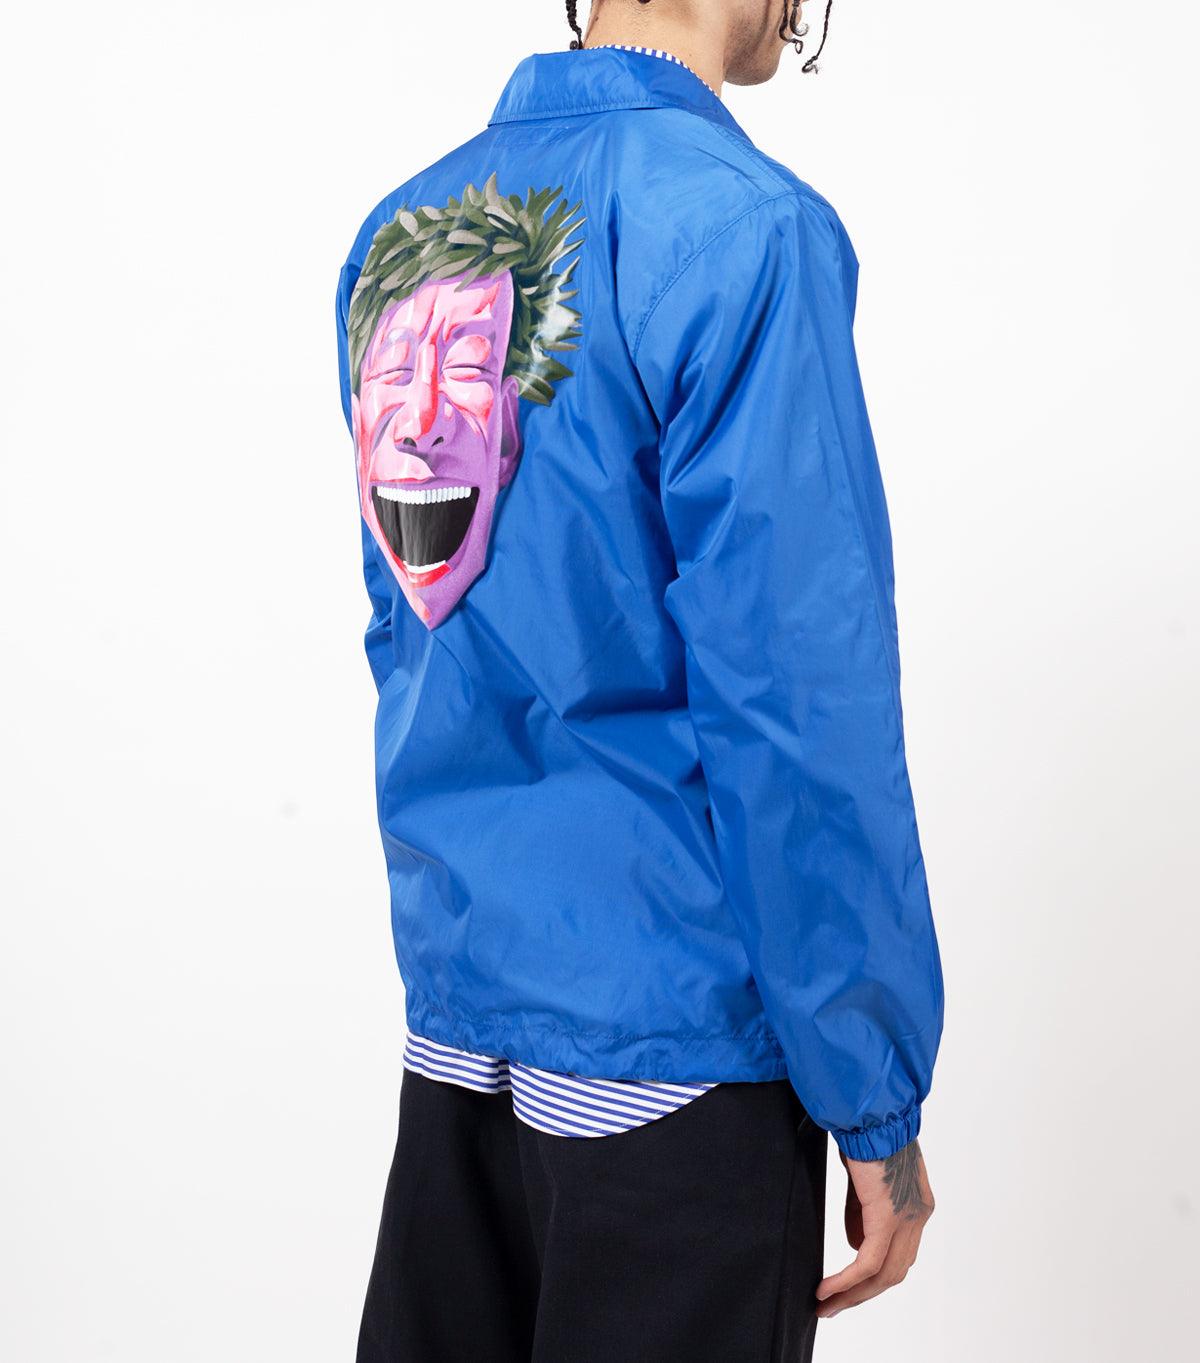 CdG SHIRT Woven Jacket Blue | SOMEWHERE